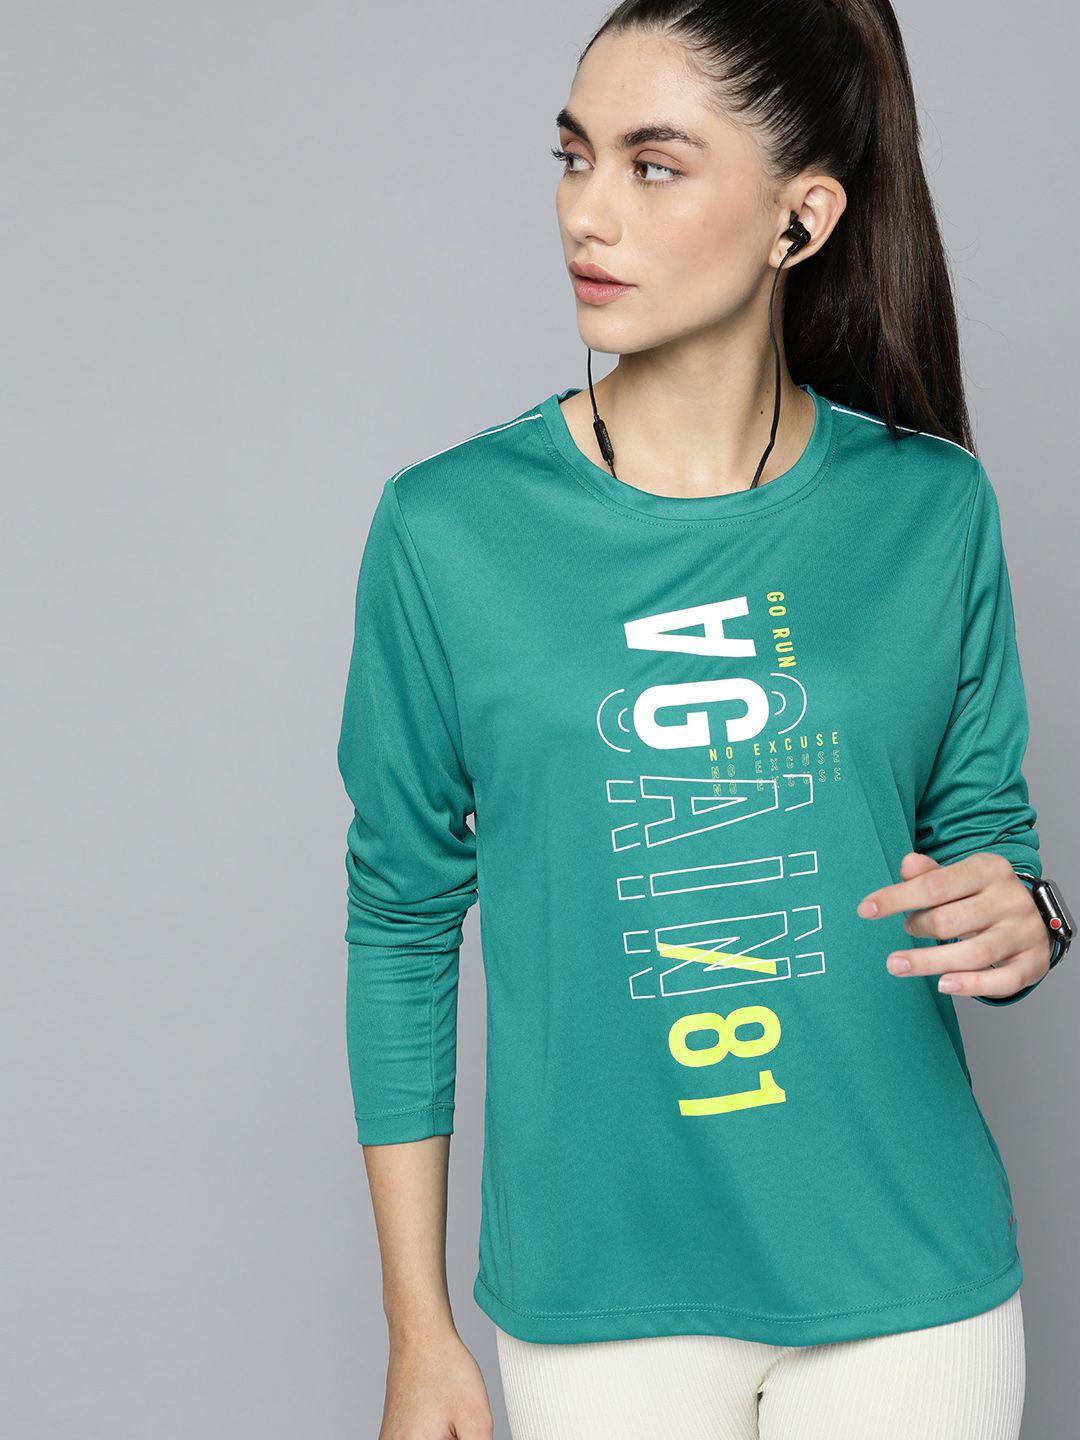 slazenger women teal green typography printed running t-shirt